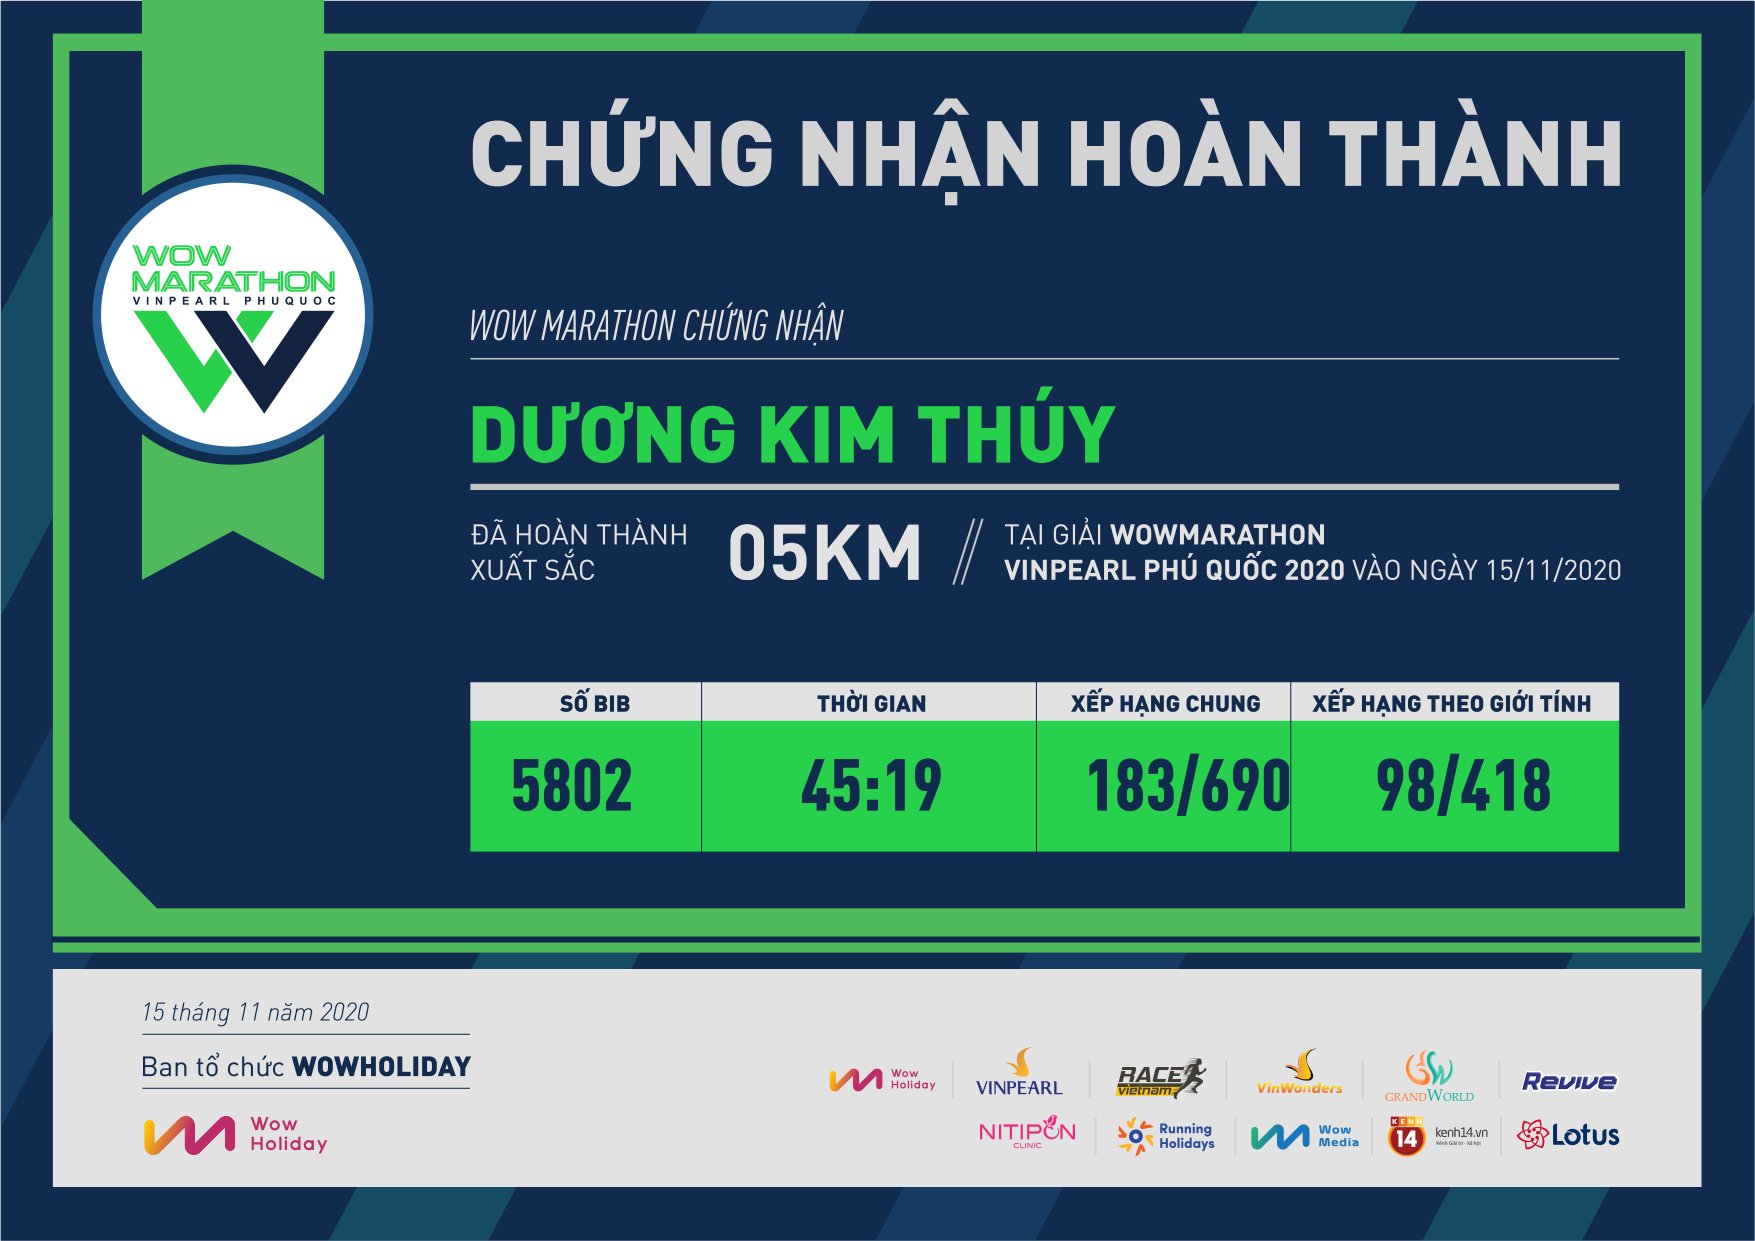 5802 - Dương Kim Thúy